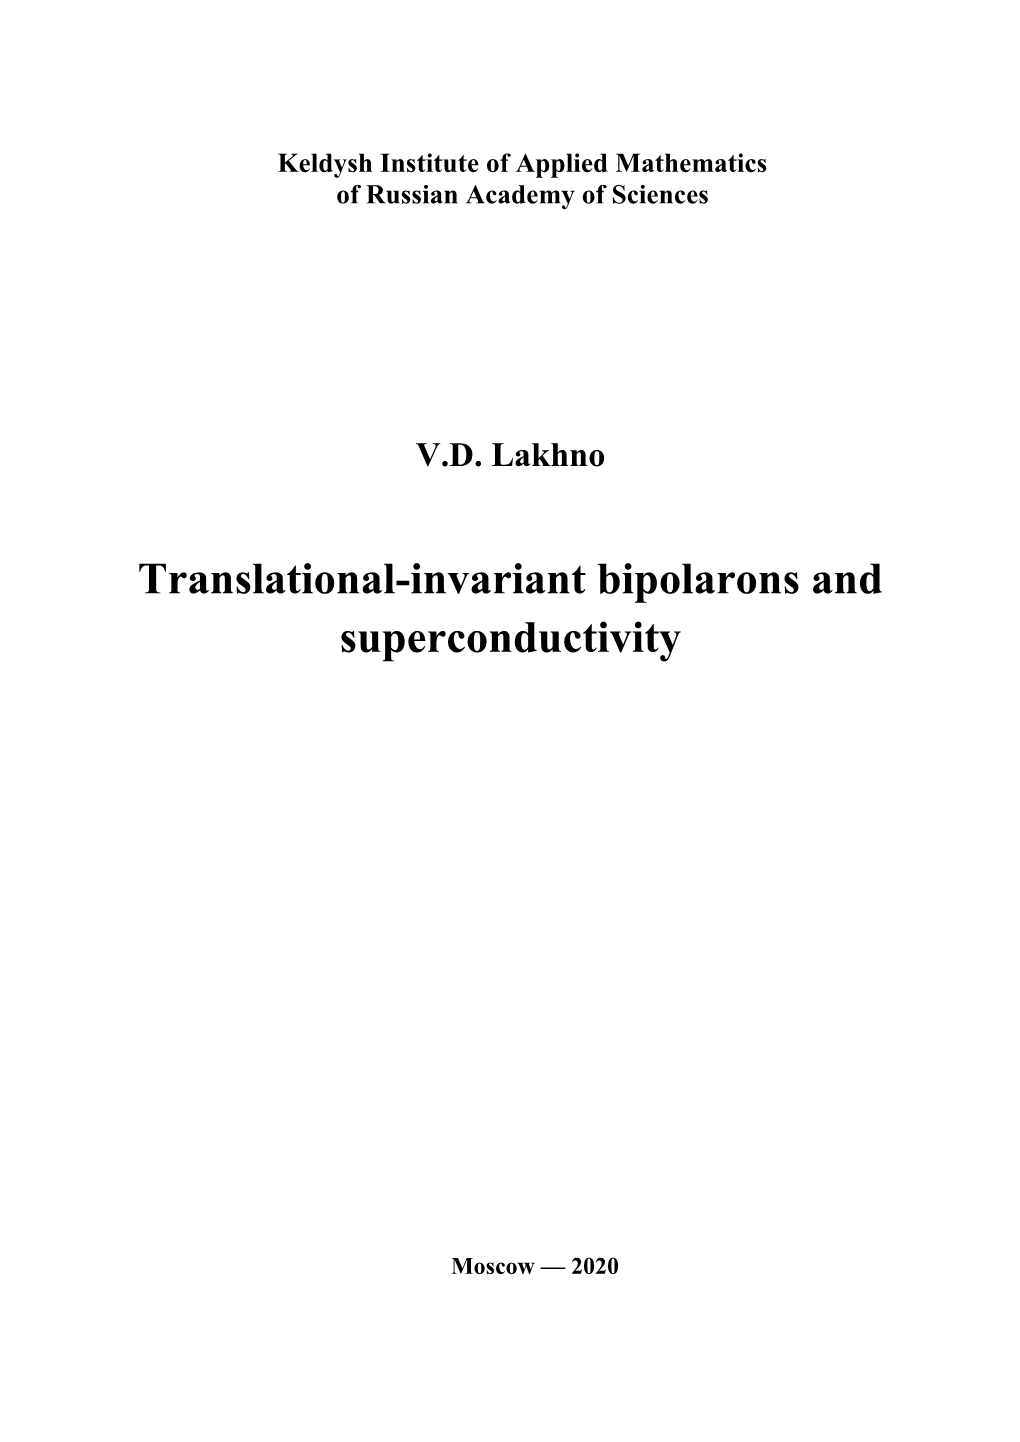 Translational-Invariant Bipolarons and Superconductivity